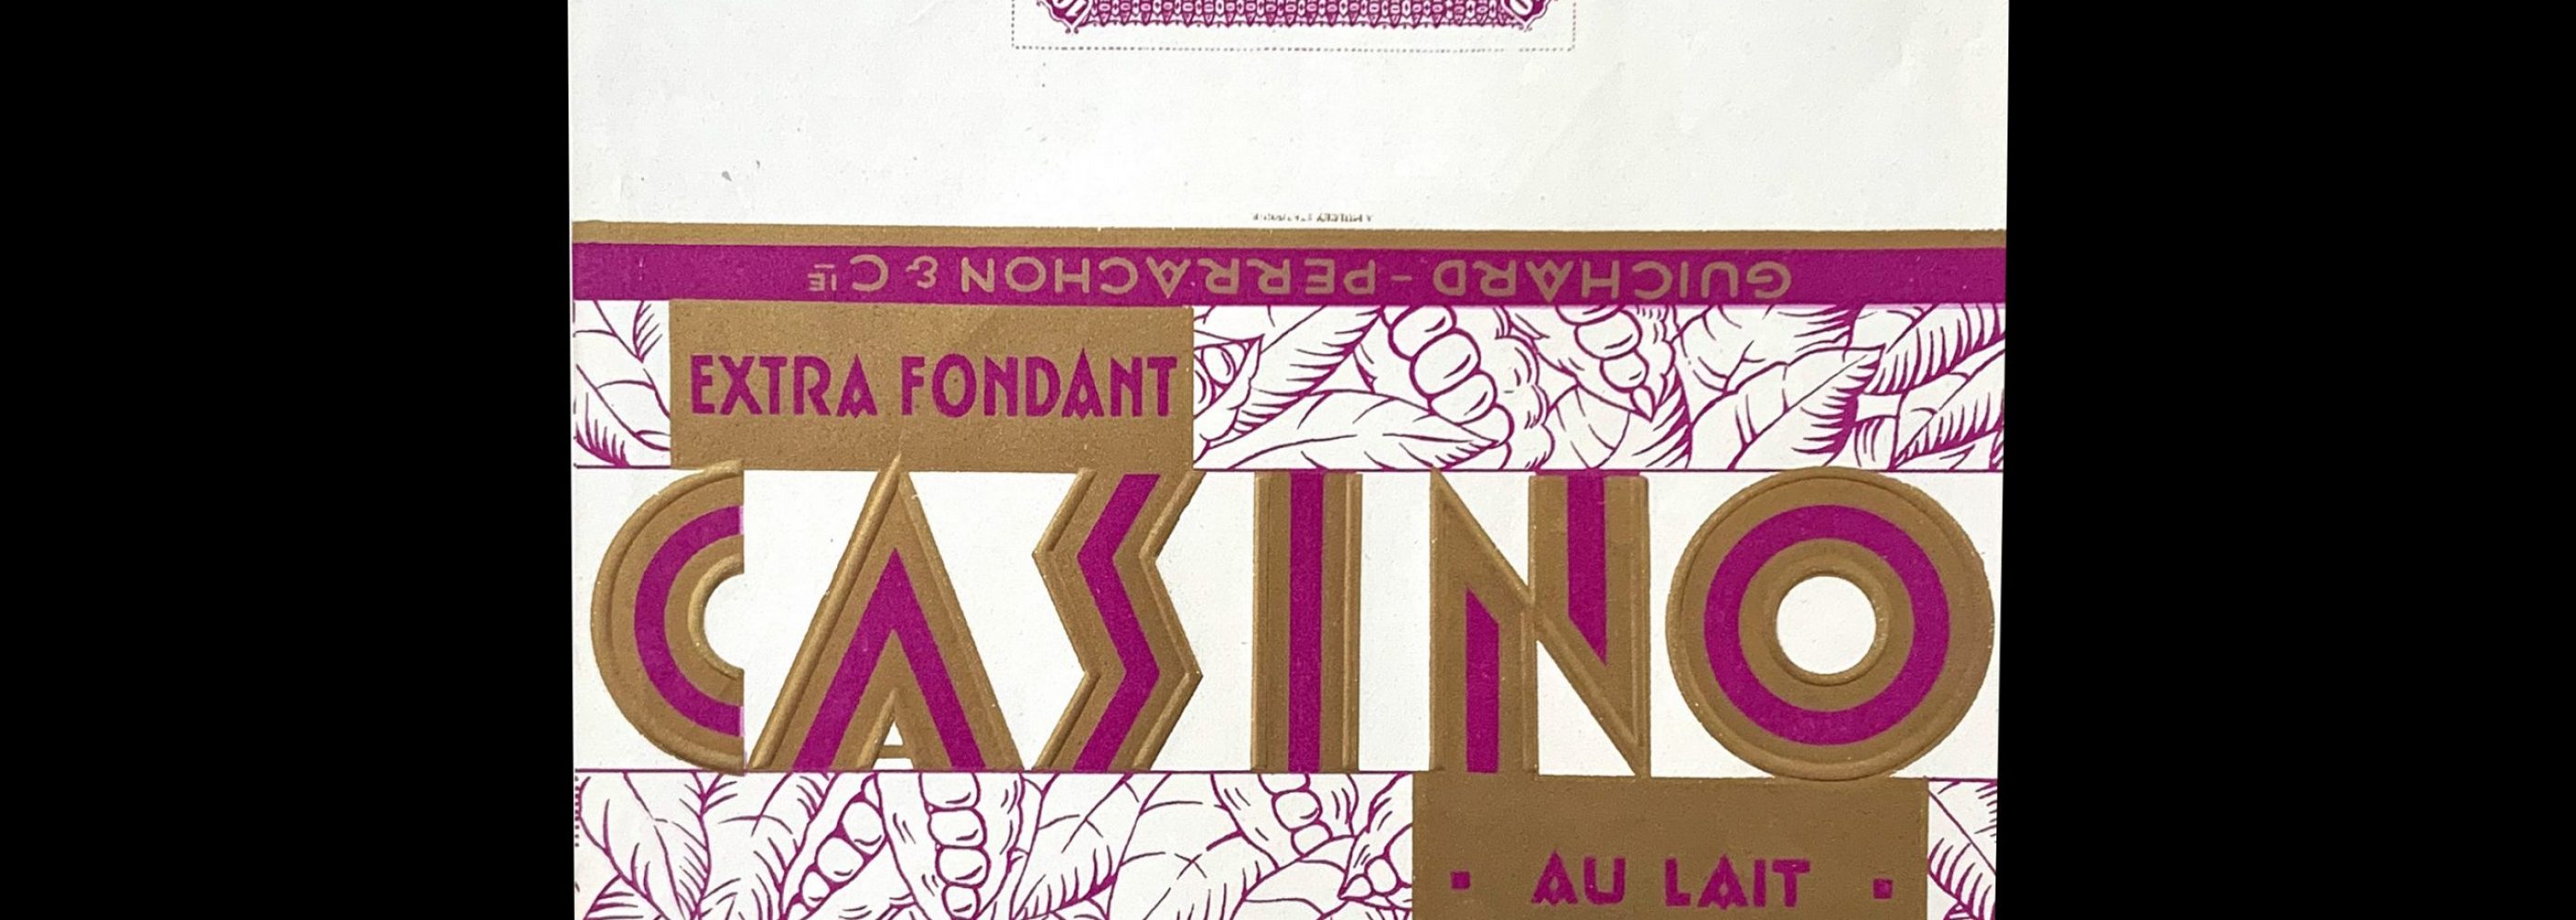 Casino vintage chocolate label